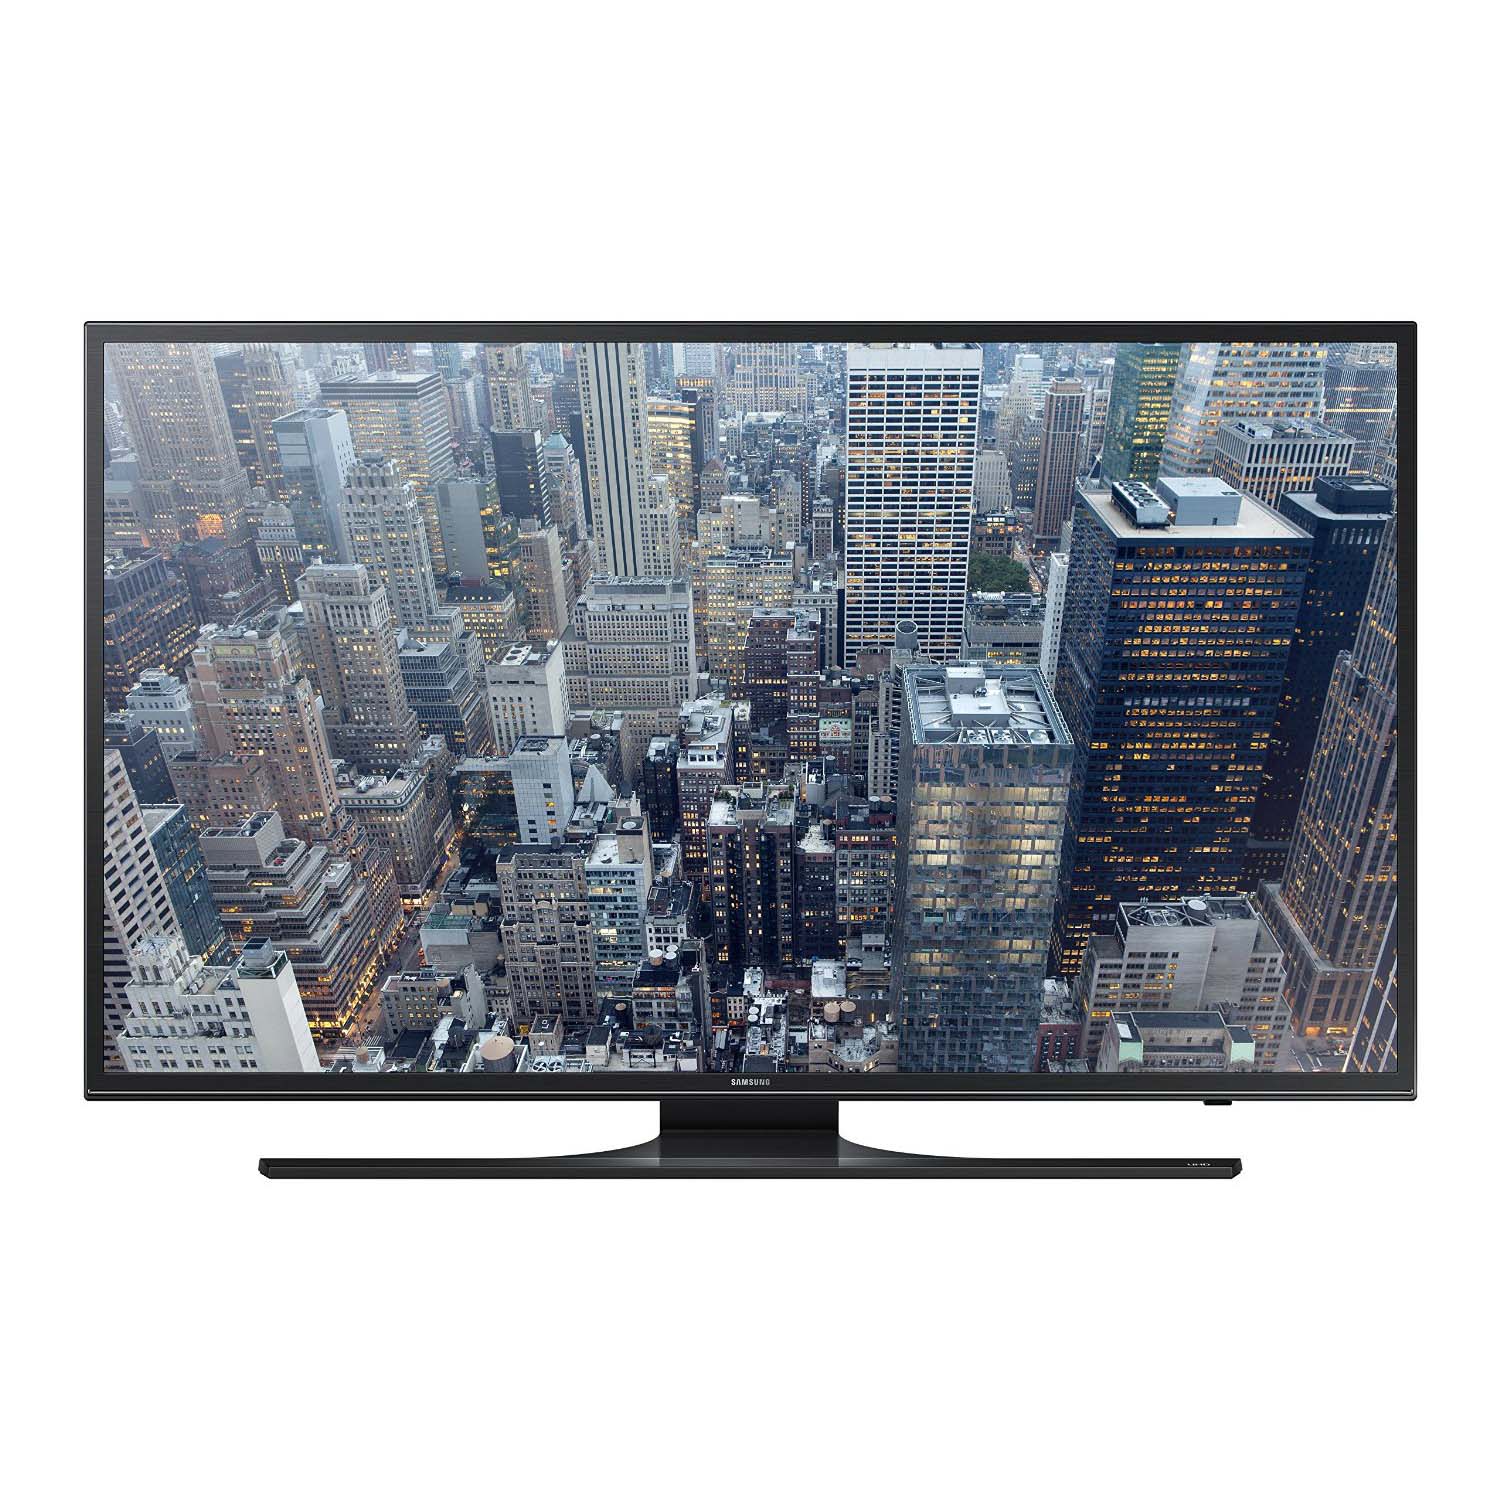 Samsung UN75JU6500 75-Inch 4K Ultra HD Smart LED TV (2015 Model) *관부가세 별도*